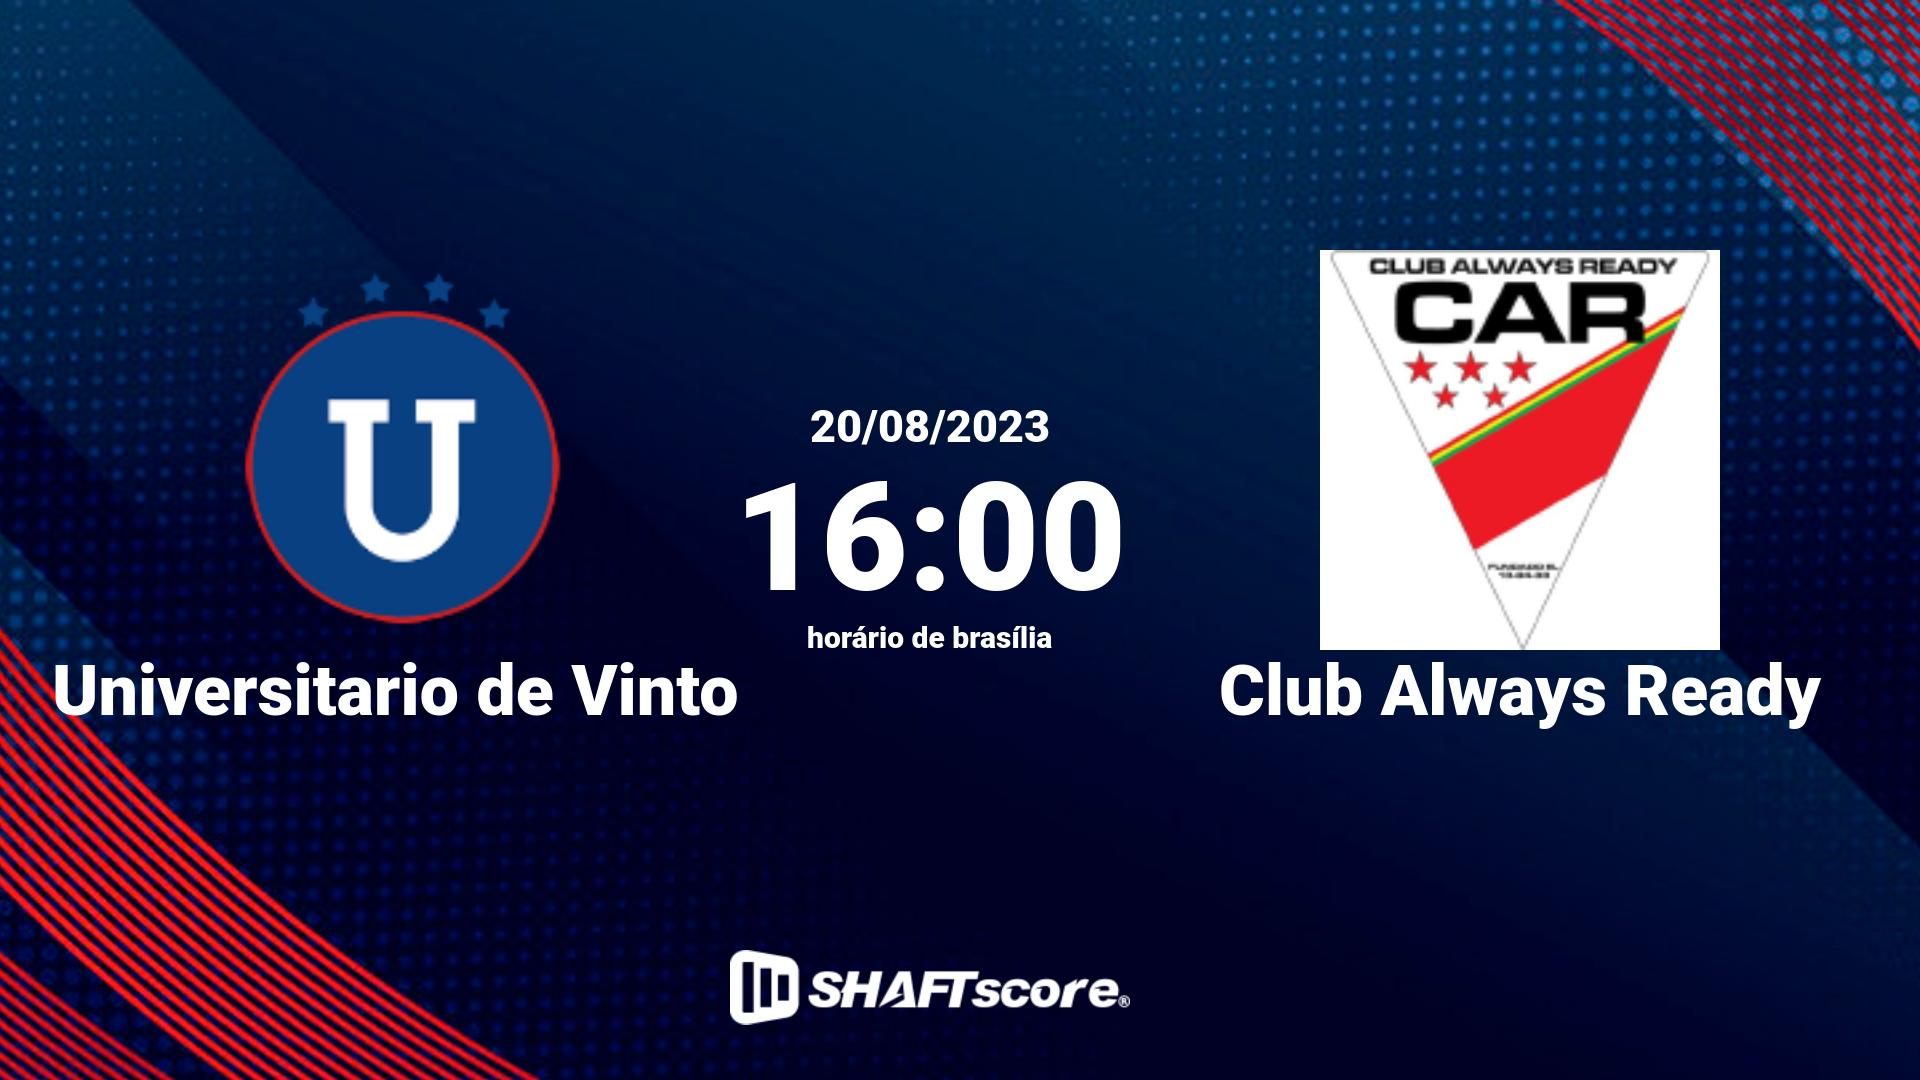 Estatísticas do jogo Universitario de Vinto vs Club Always Ready 20.08 16:00